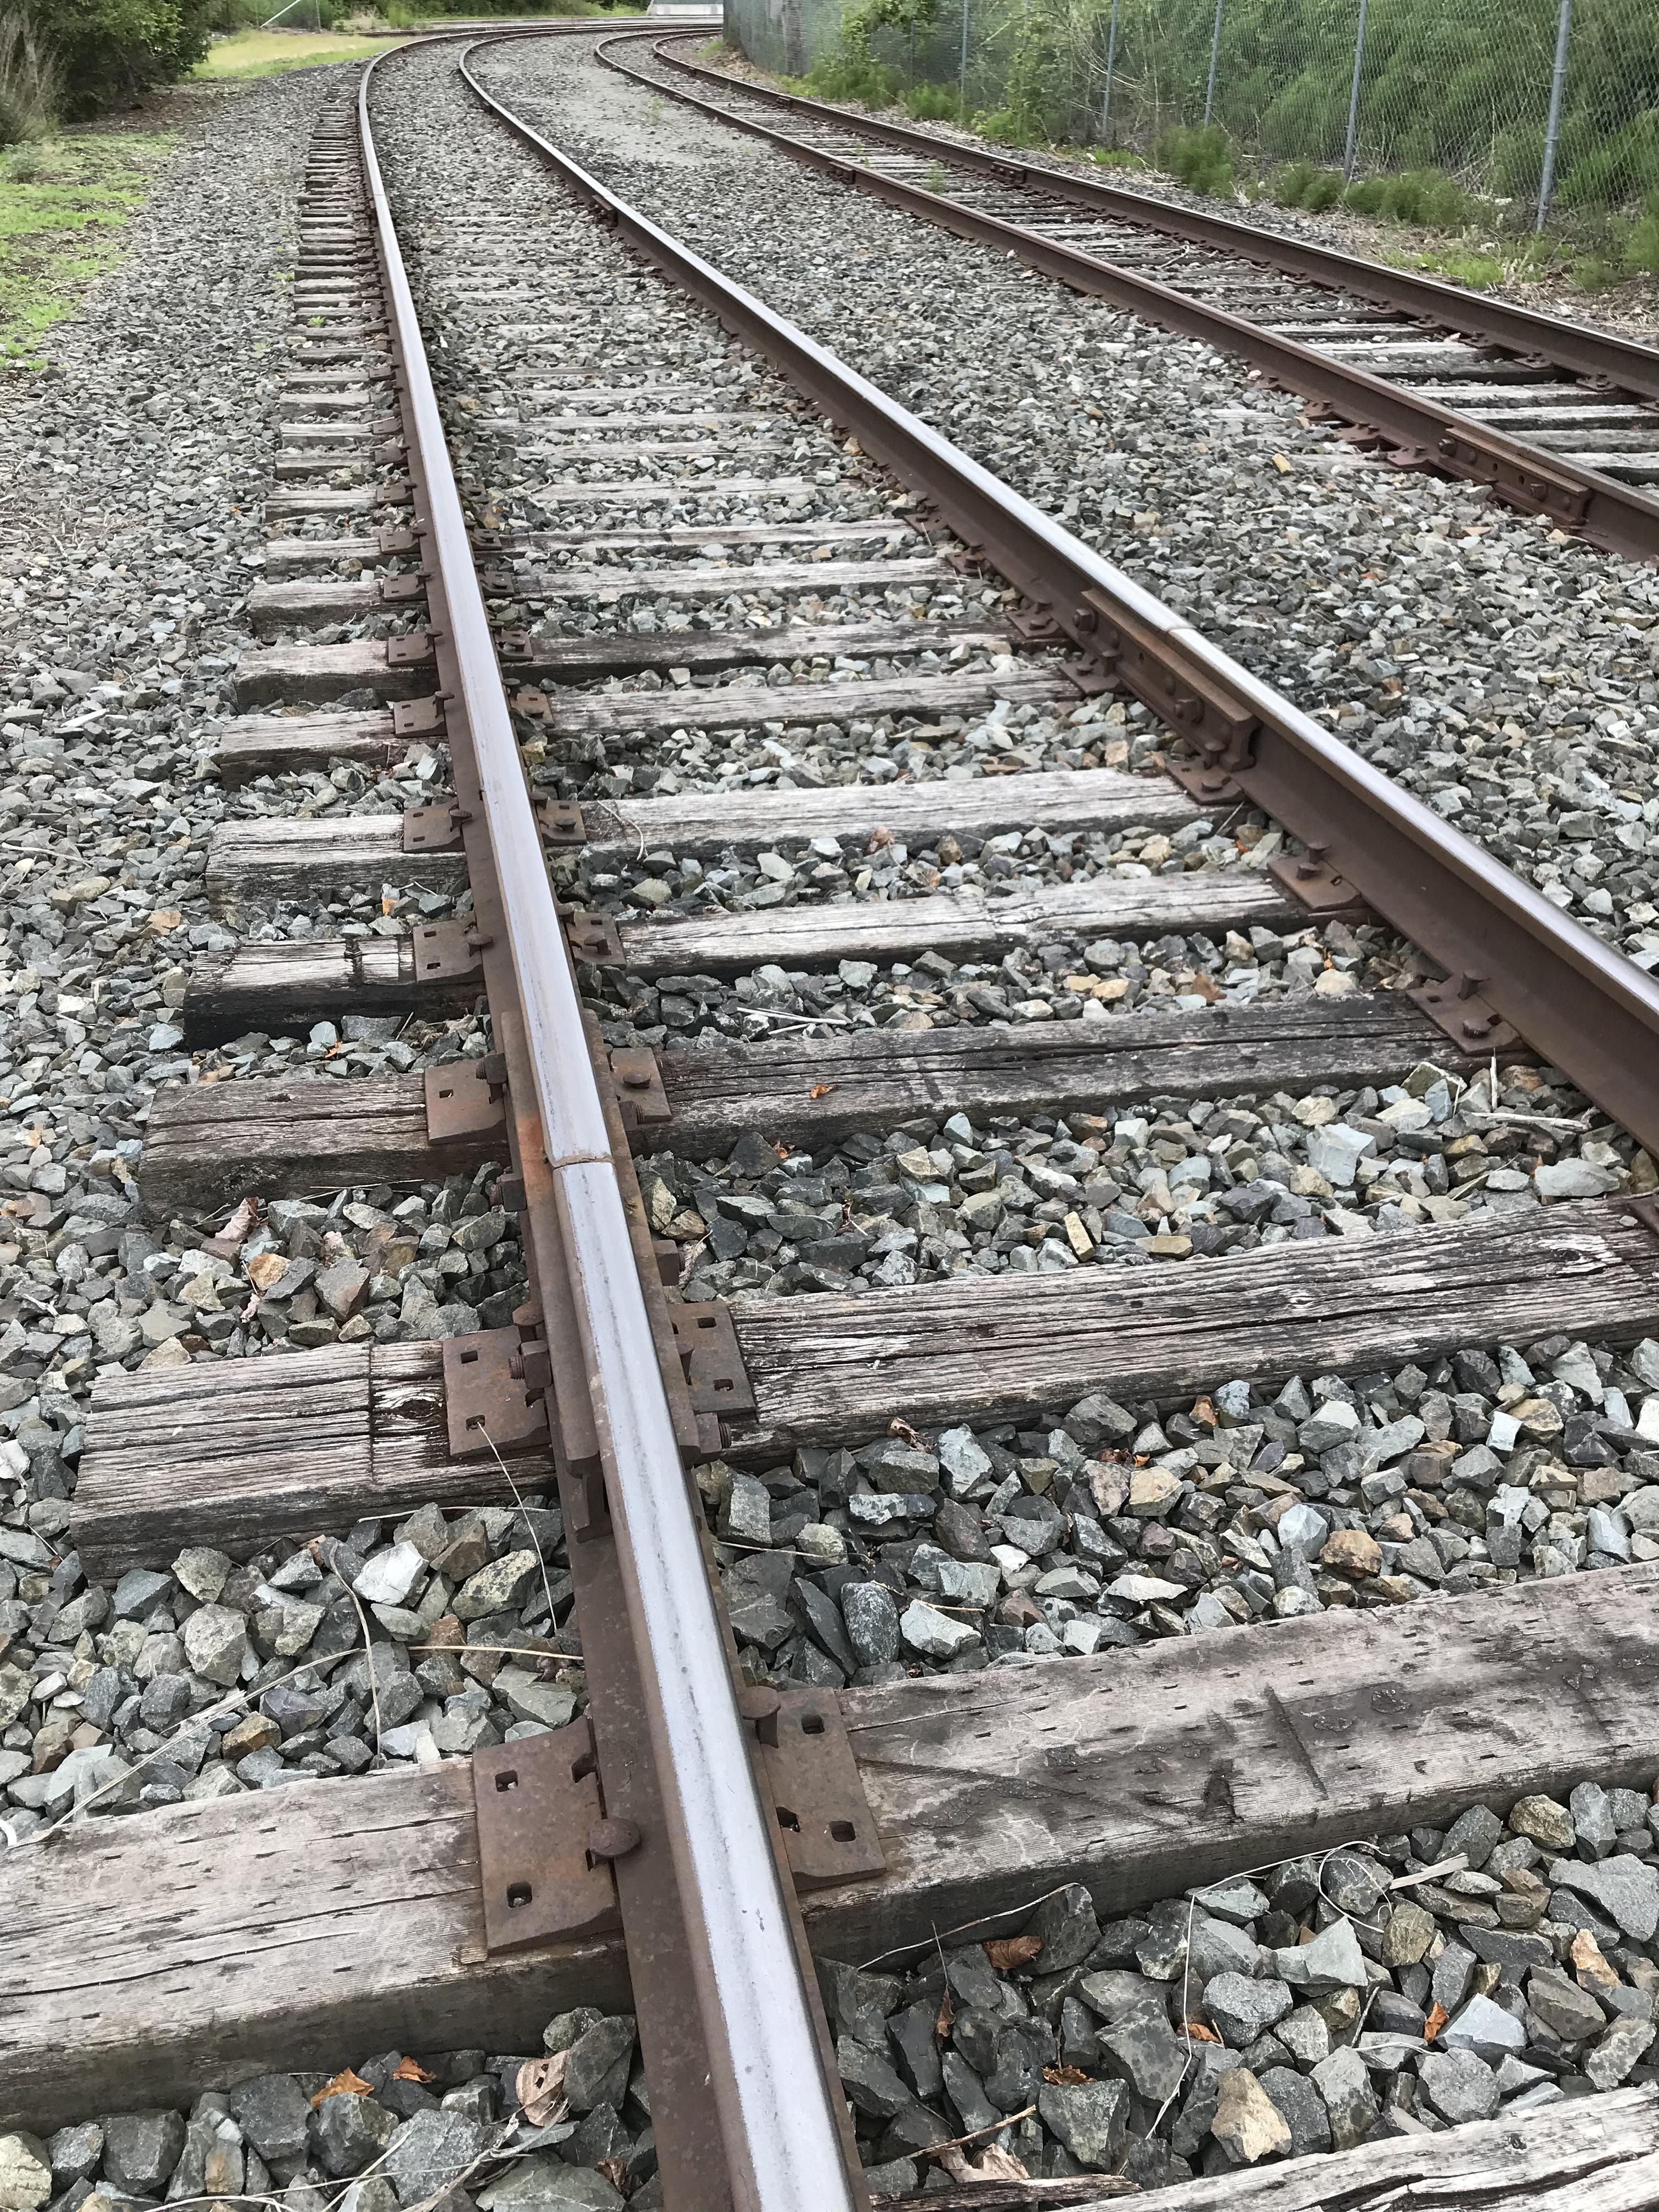 Railroad tracks near Bellingham on a cloudy day.